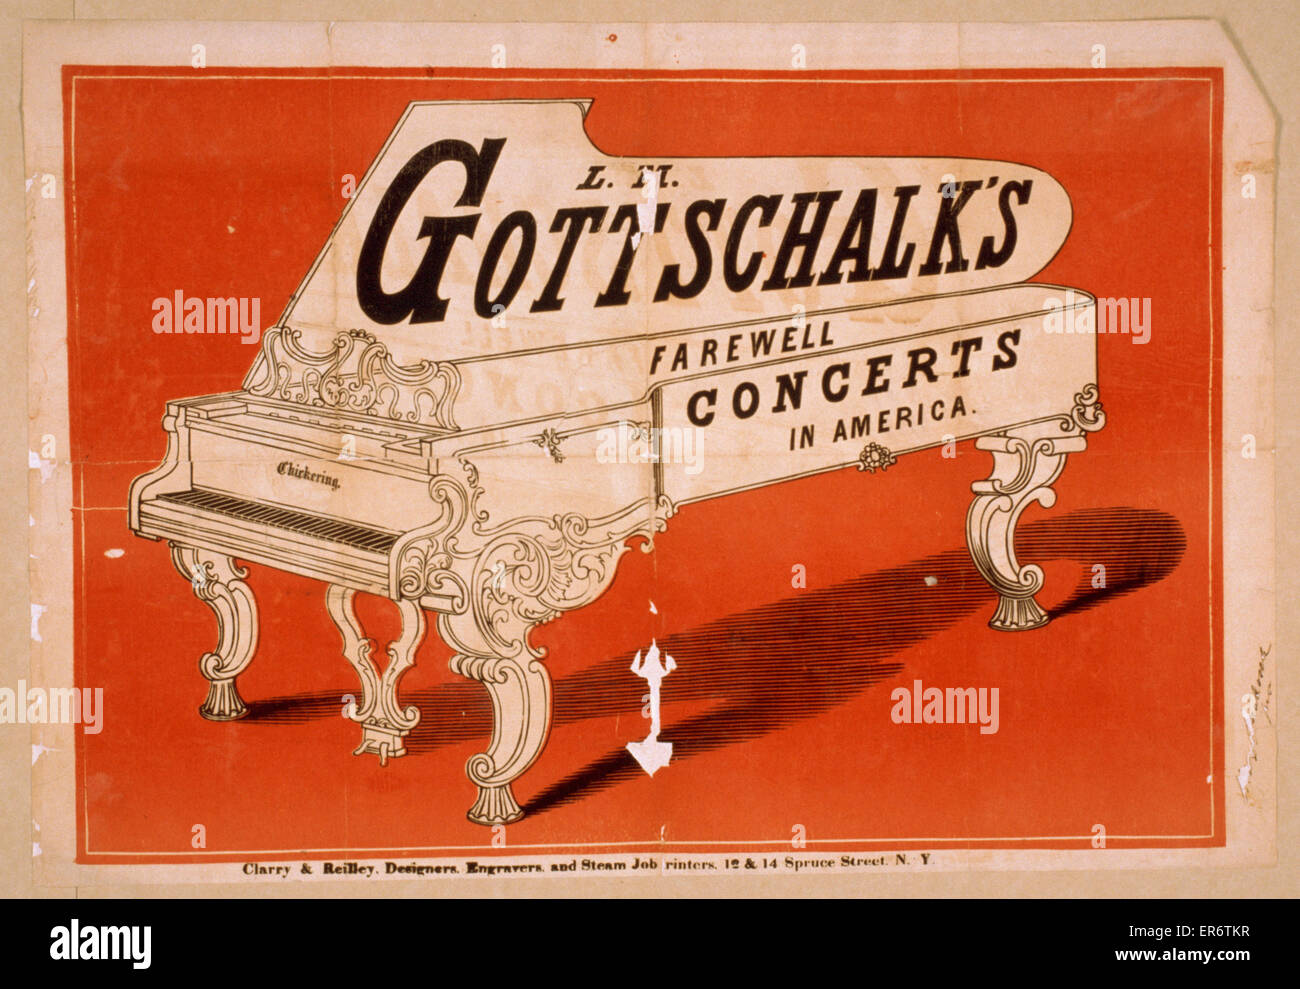 LM Gottschalk's farewell concerts in America Stock Photo